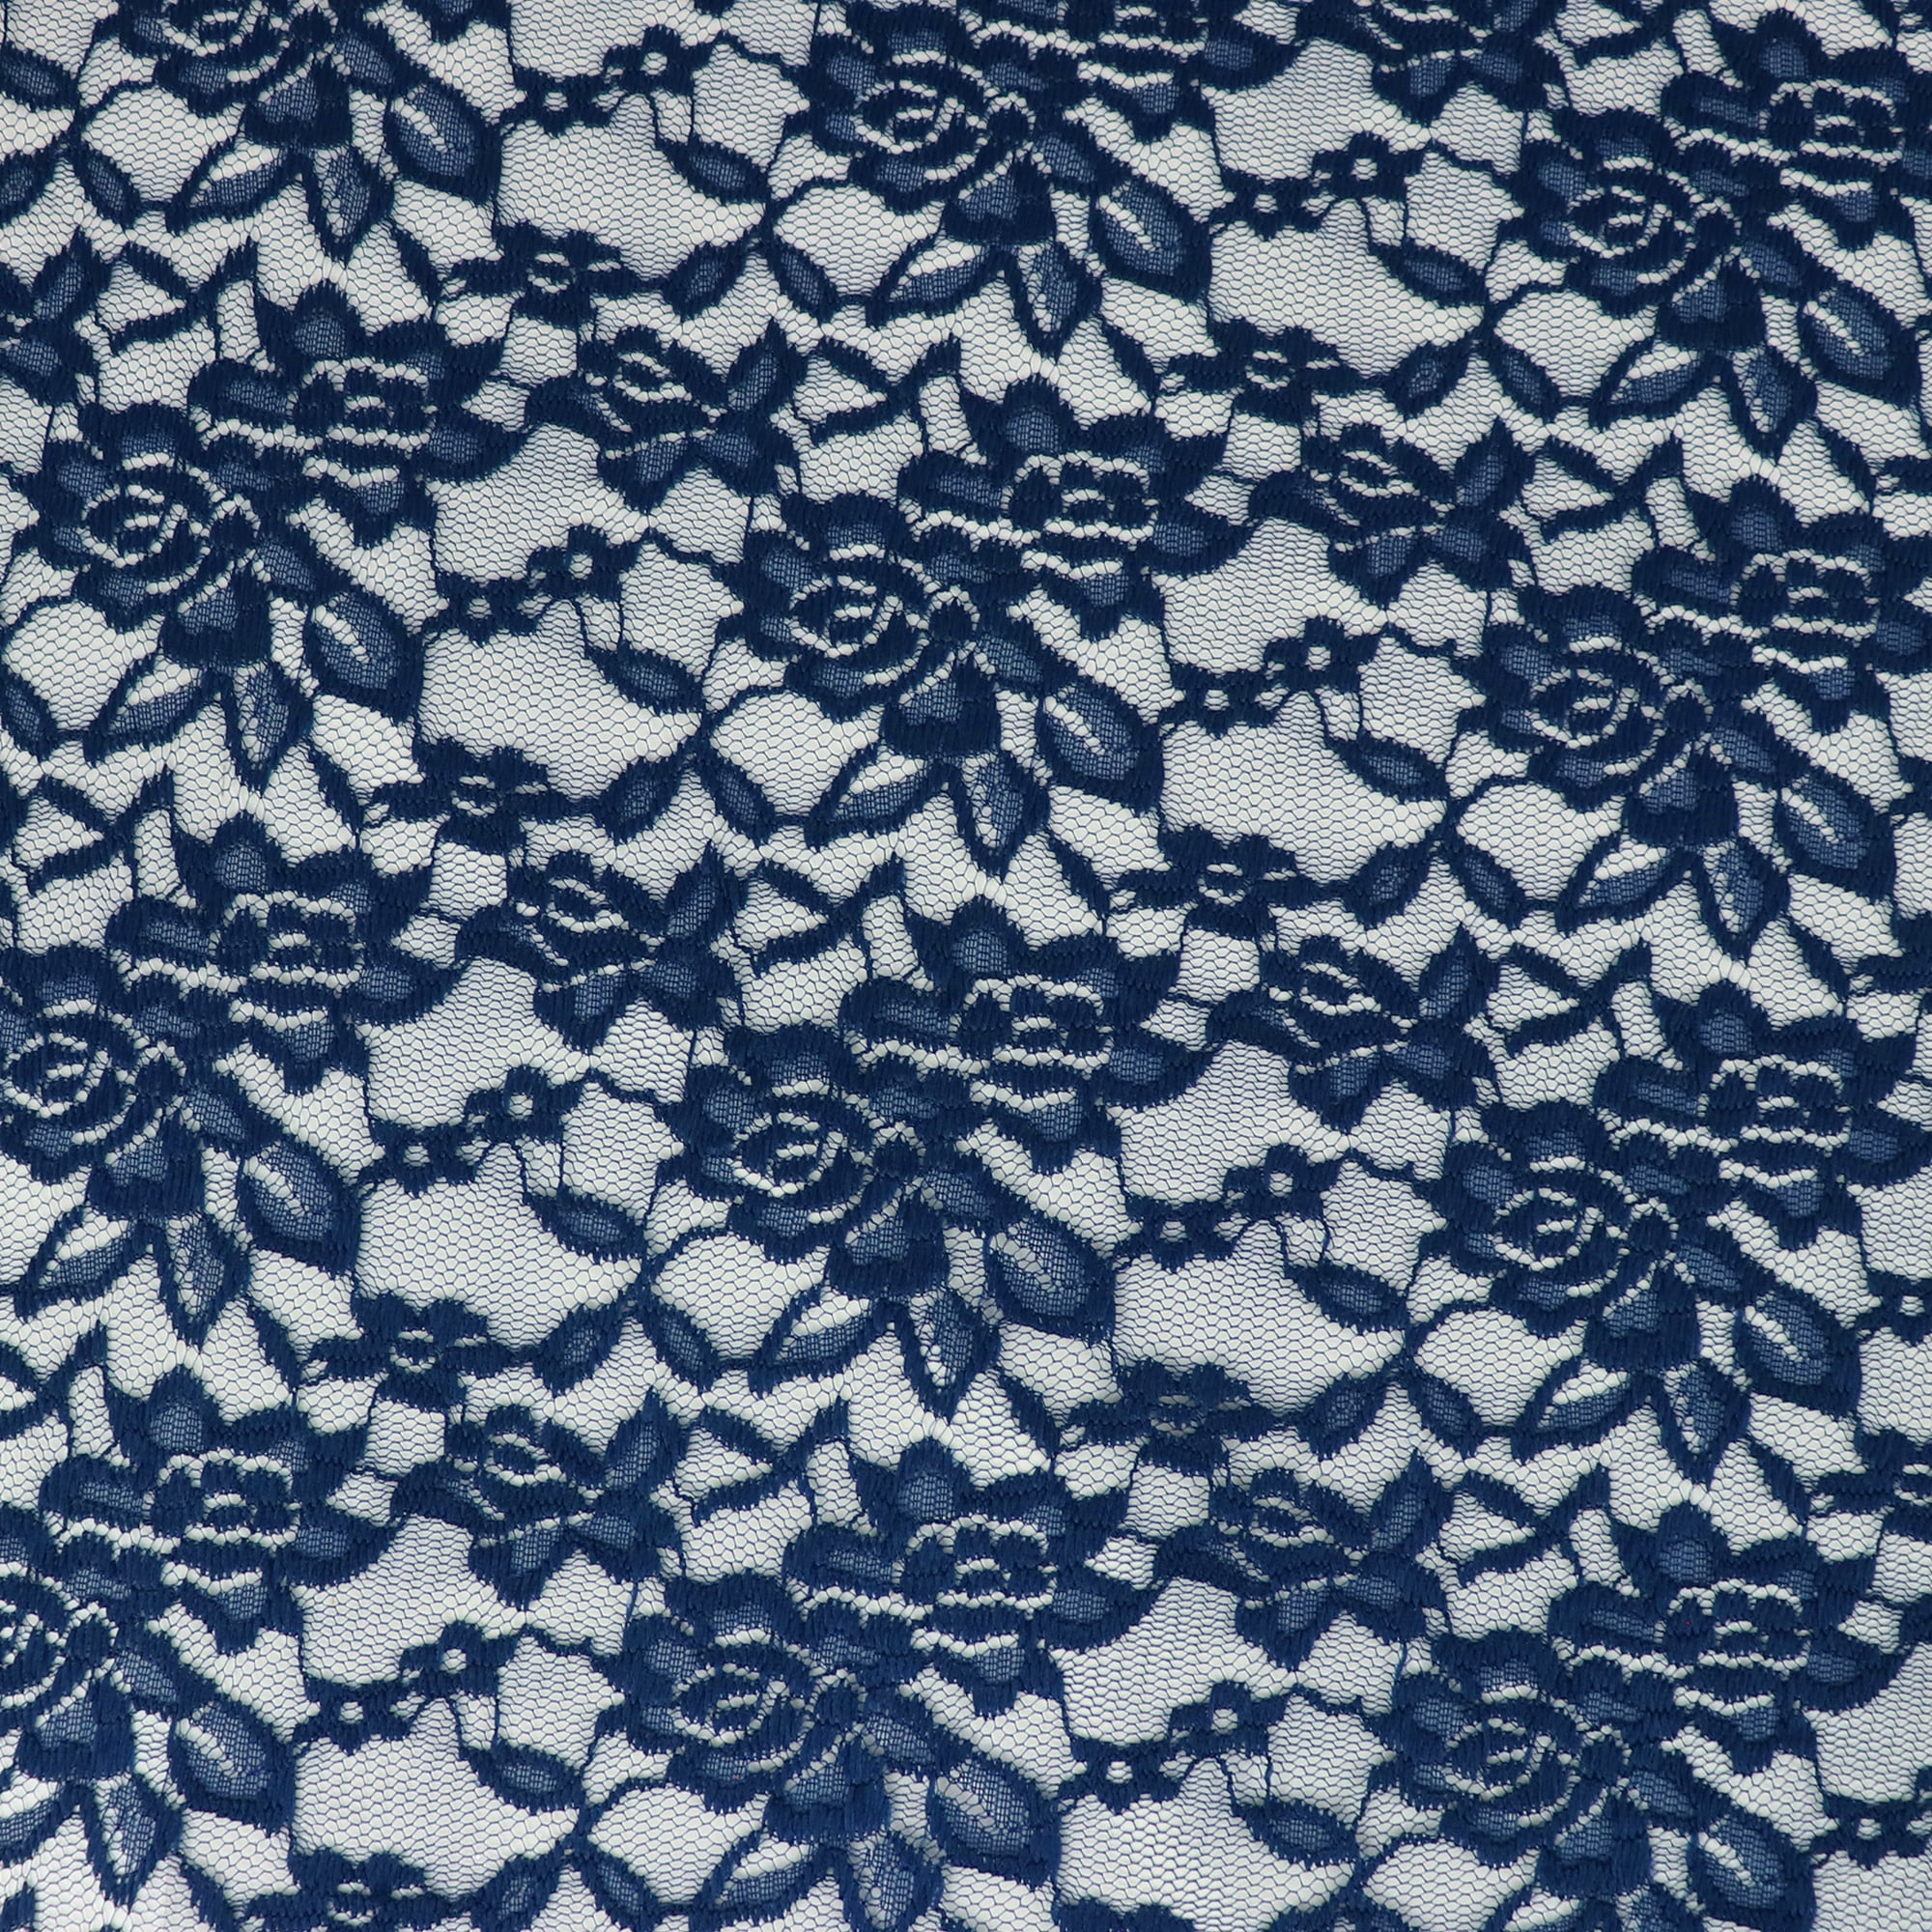 Paisley Printed Nylon Spandex Fabric By The Yard 83% Nylon + 17